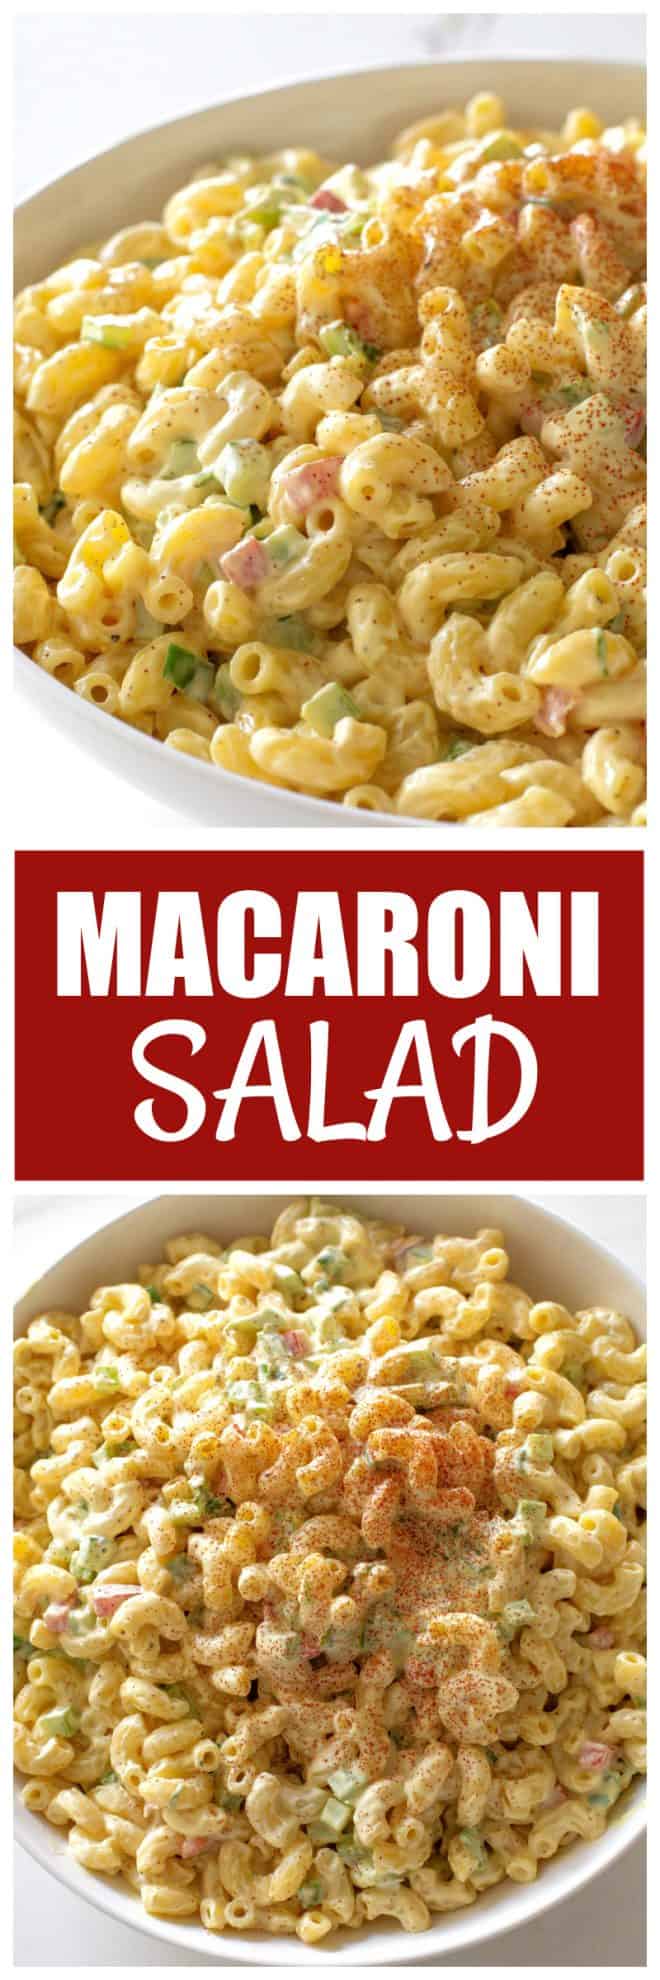 fb image - Macaroni Salad